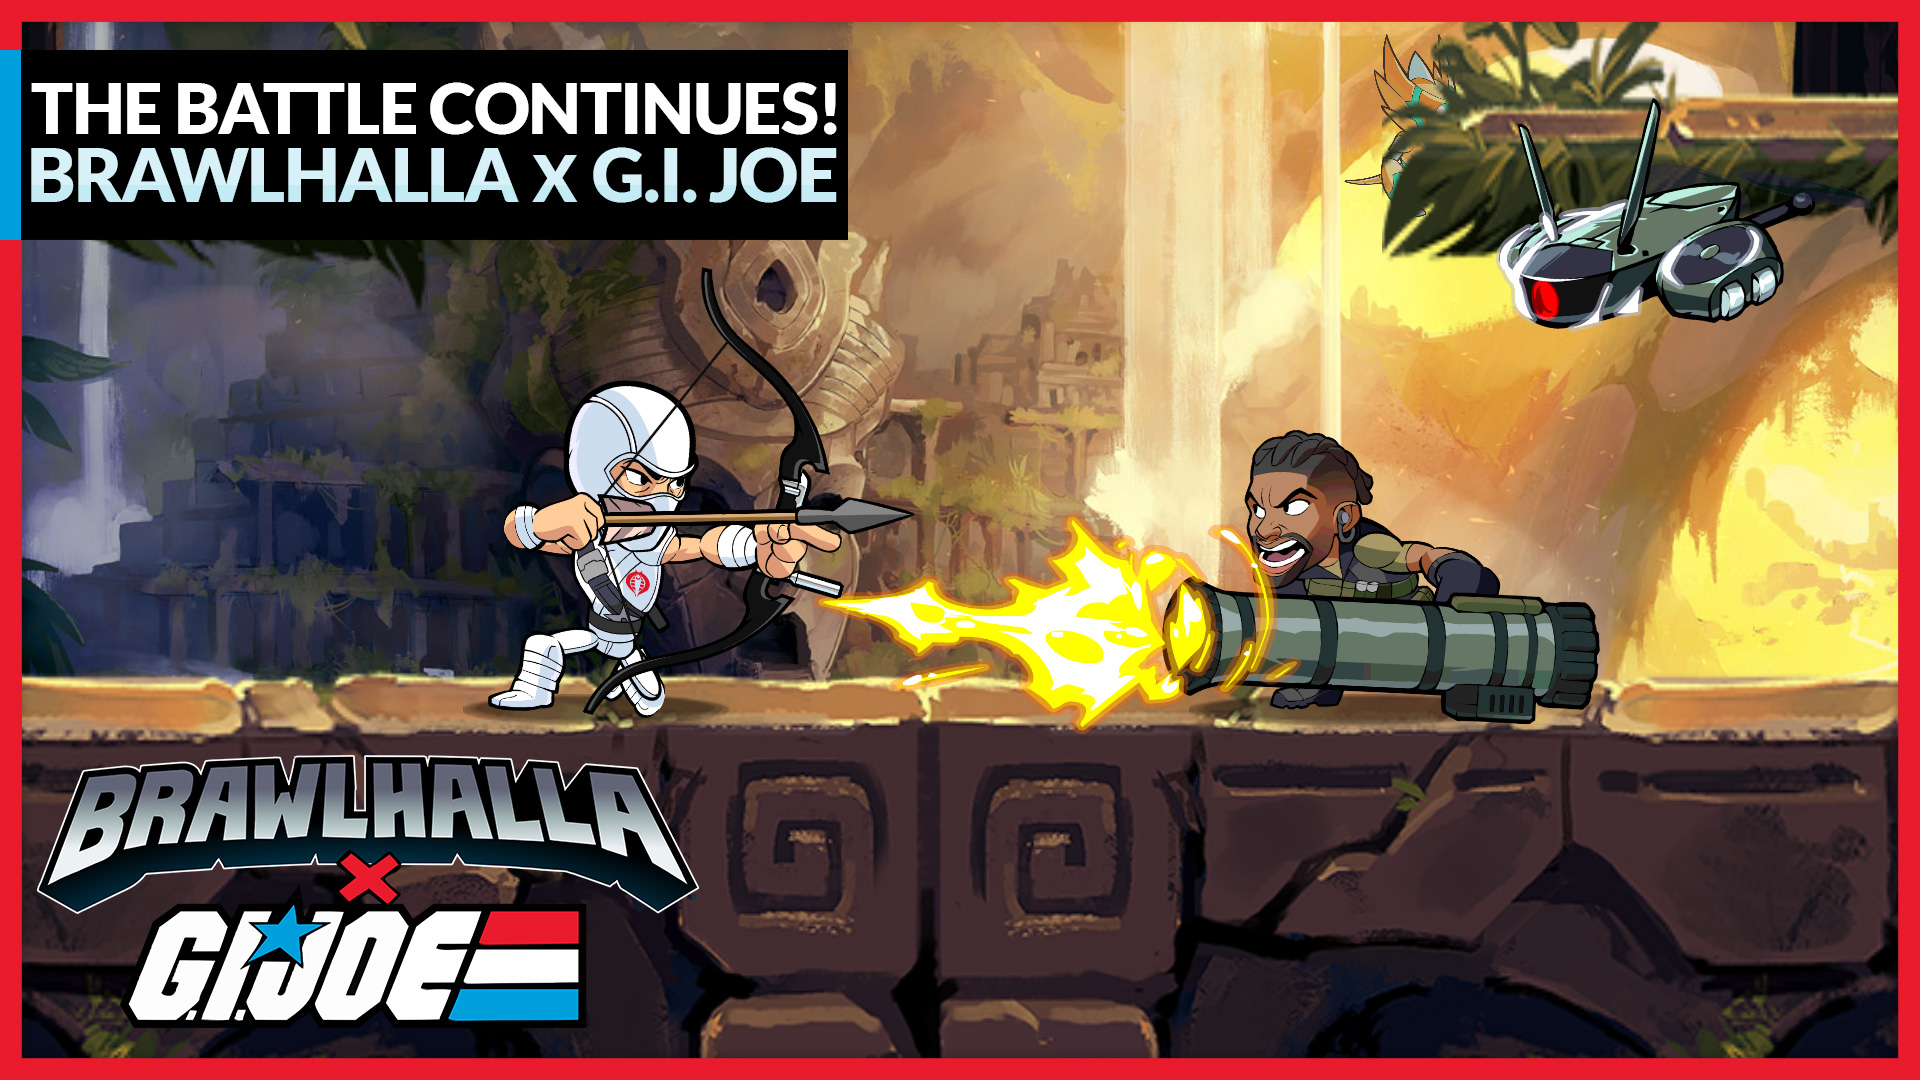 The Battle Continues in Brawlhalla x G.I. Joe